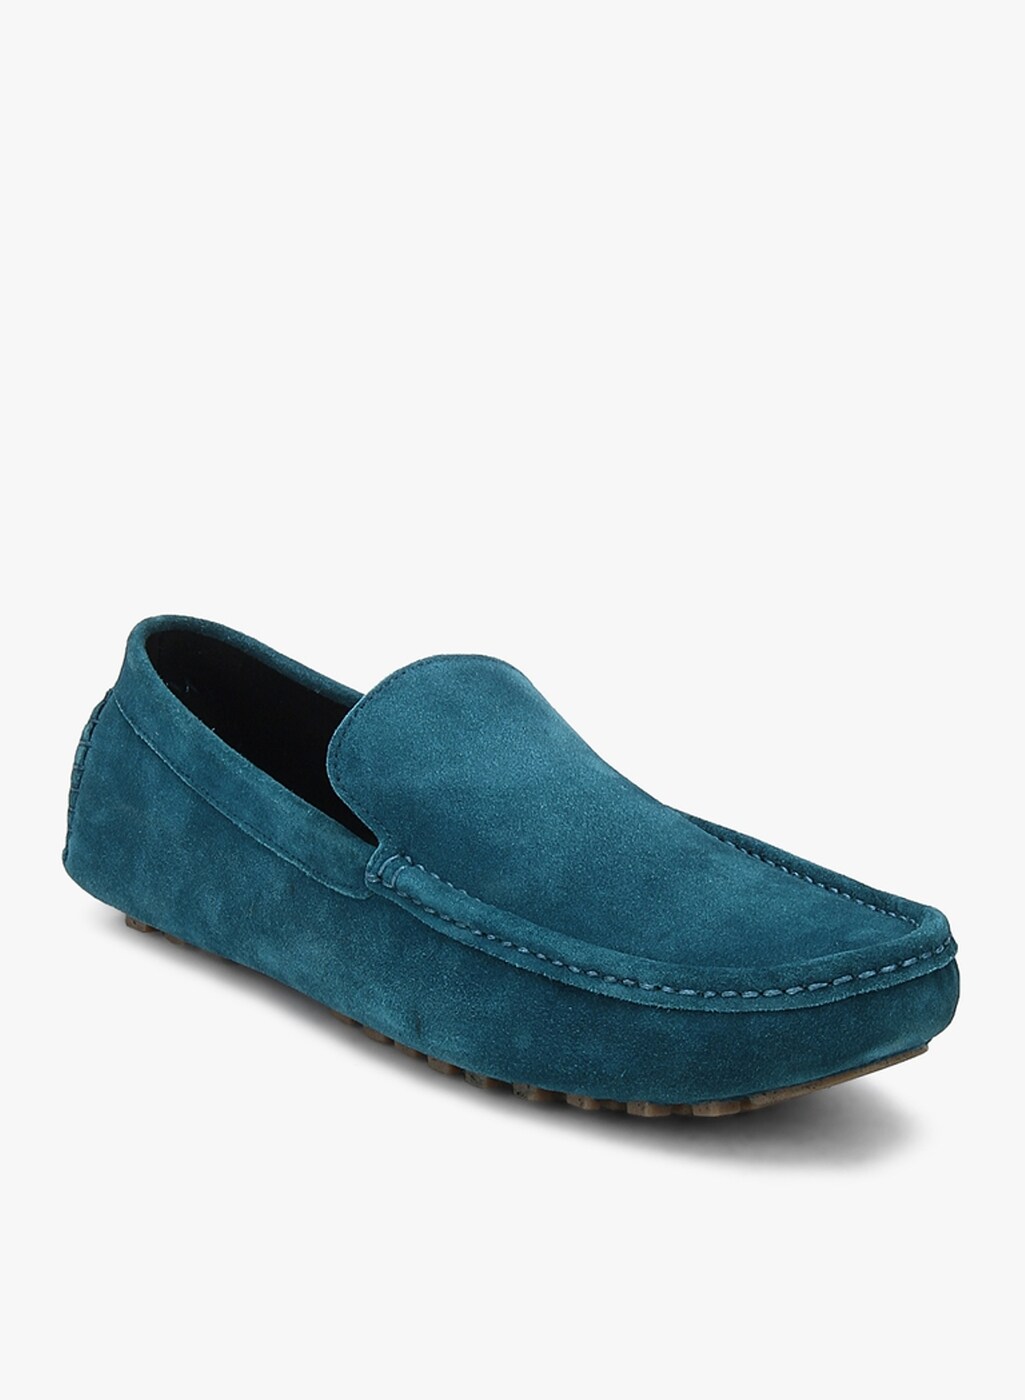 san frissco blue sneakers